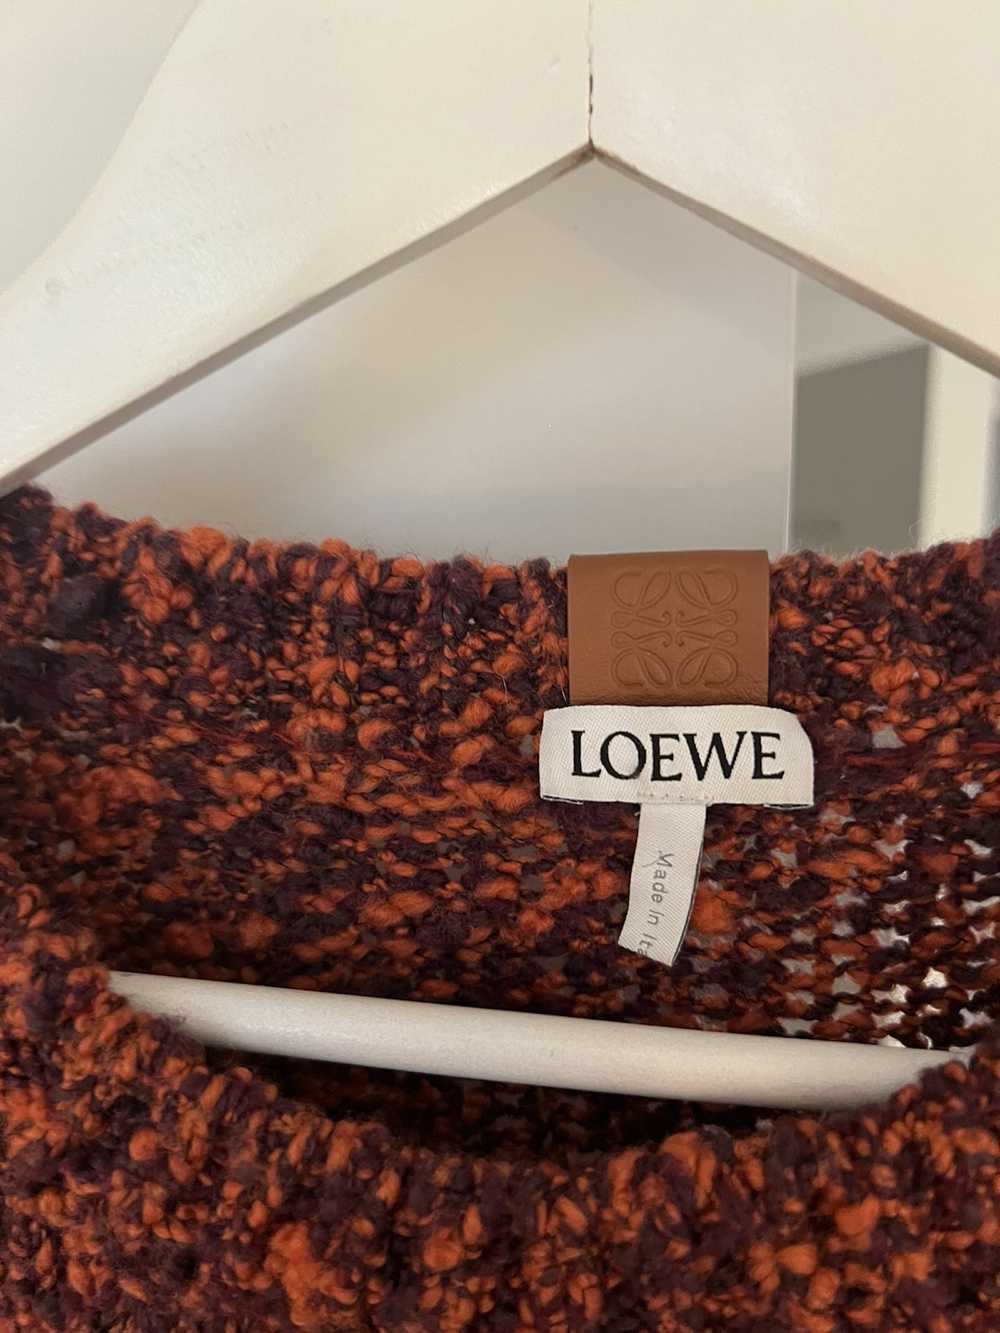 Loewe Loewe sweater - image 2